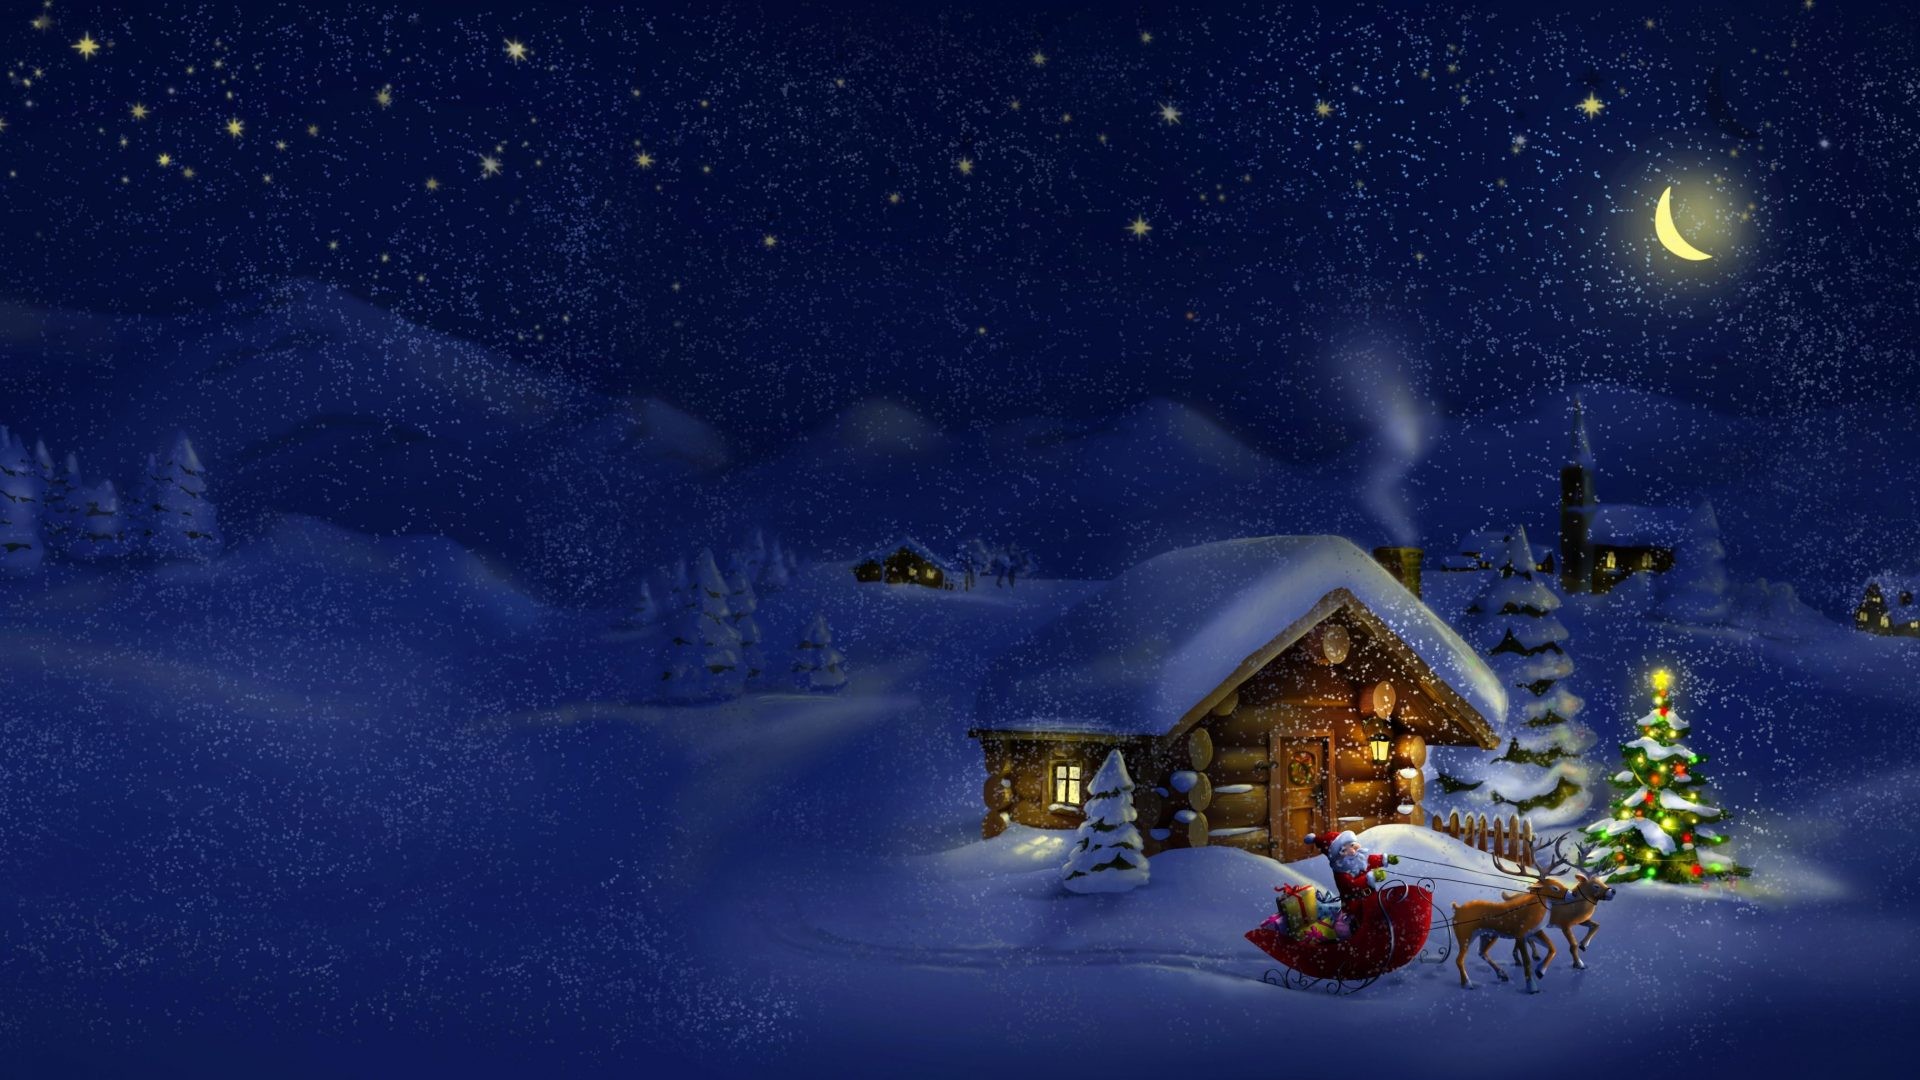 1920x1080 Eve Winter Snow Merry Magic Evening Santa Nature Xmas Snowy Christmas Time  Free Desktop Backgrounds Downloads - 5400x2052